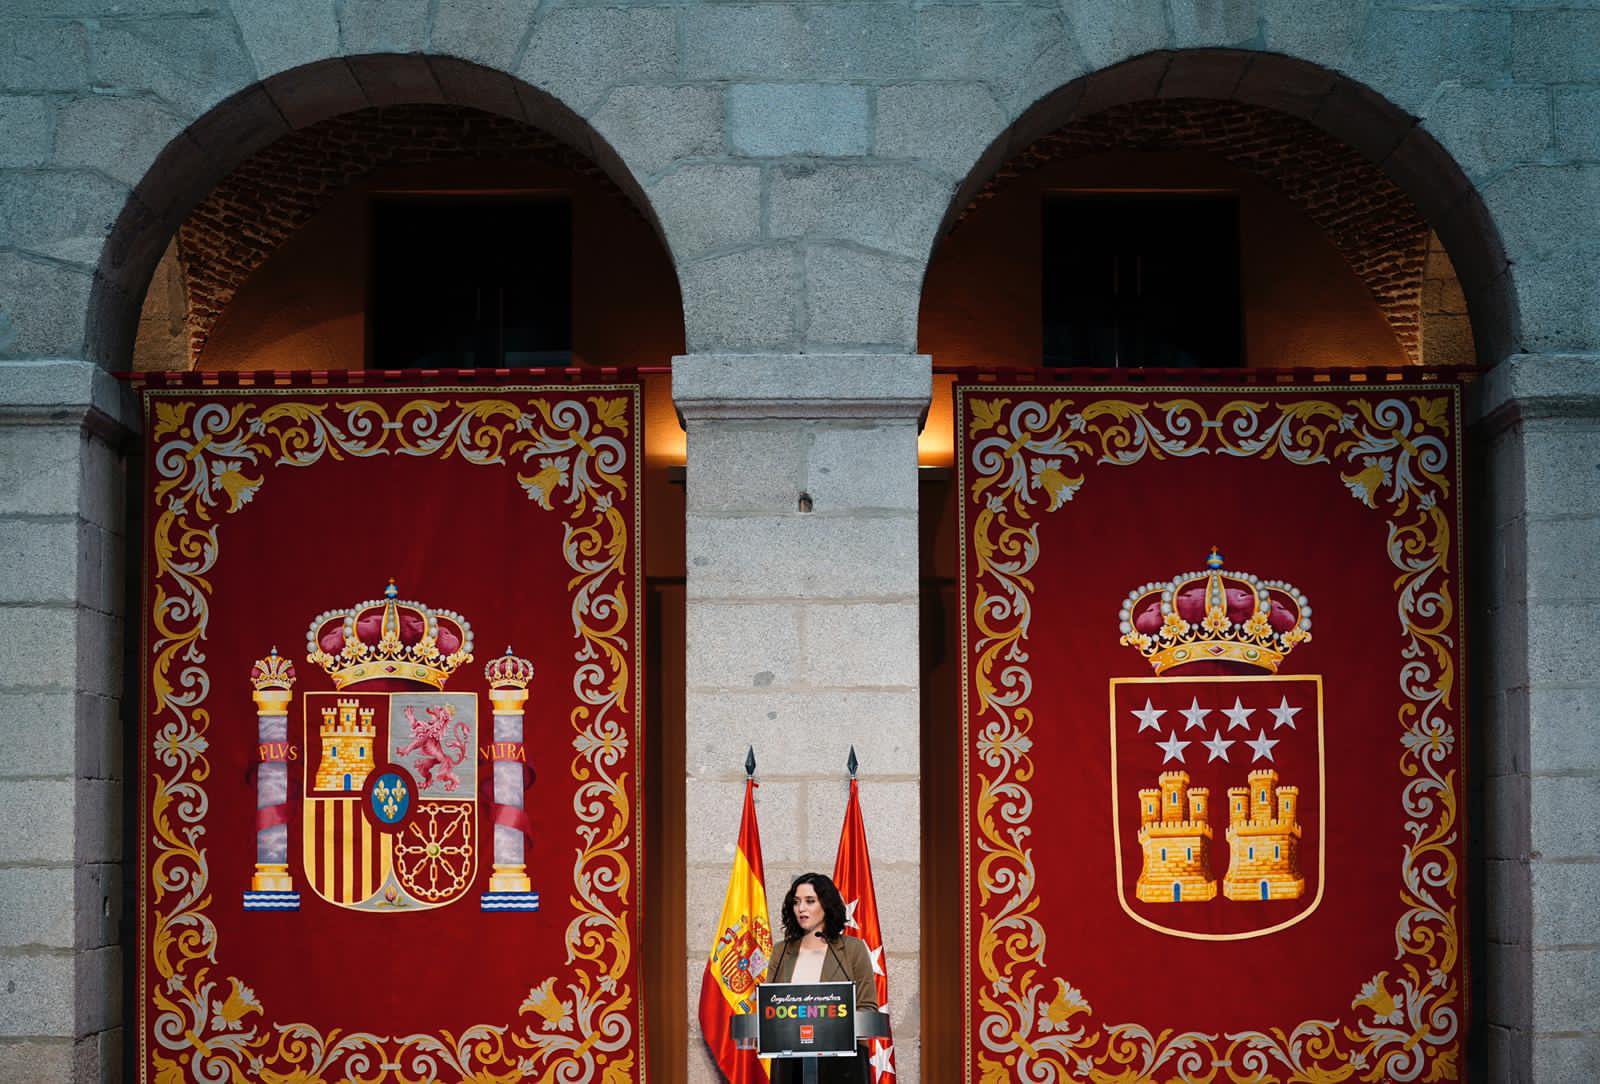 La presidenta de Madrid, Isabel Díaz Ayuso.